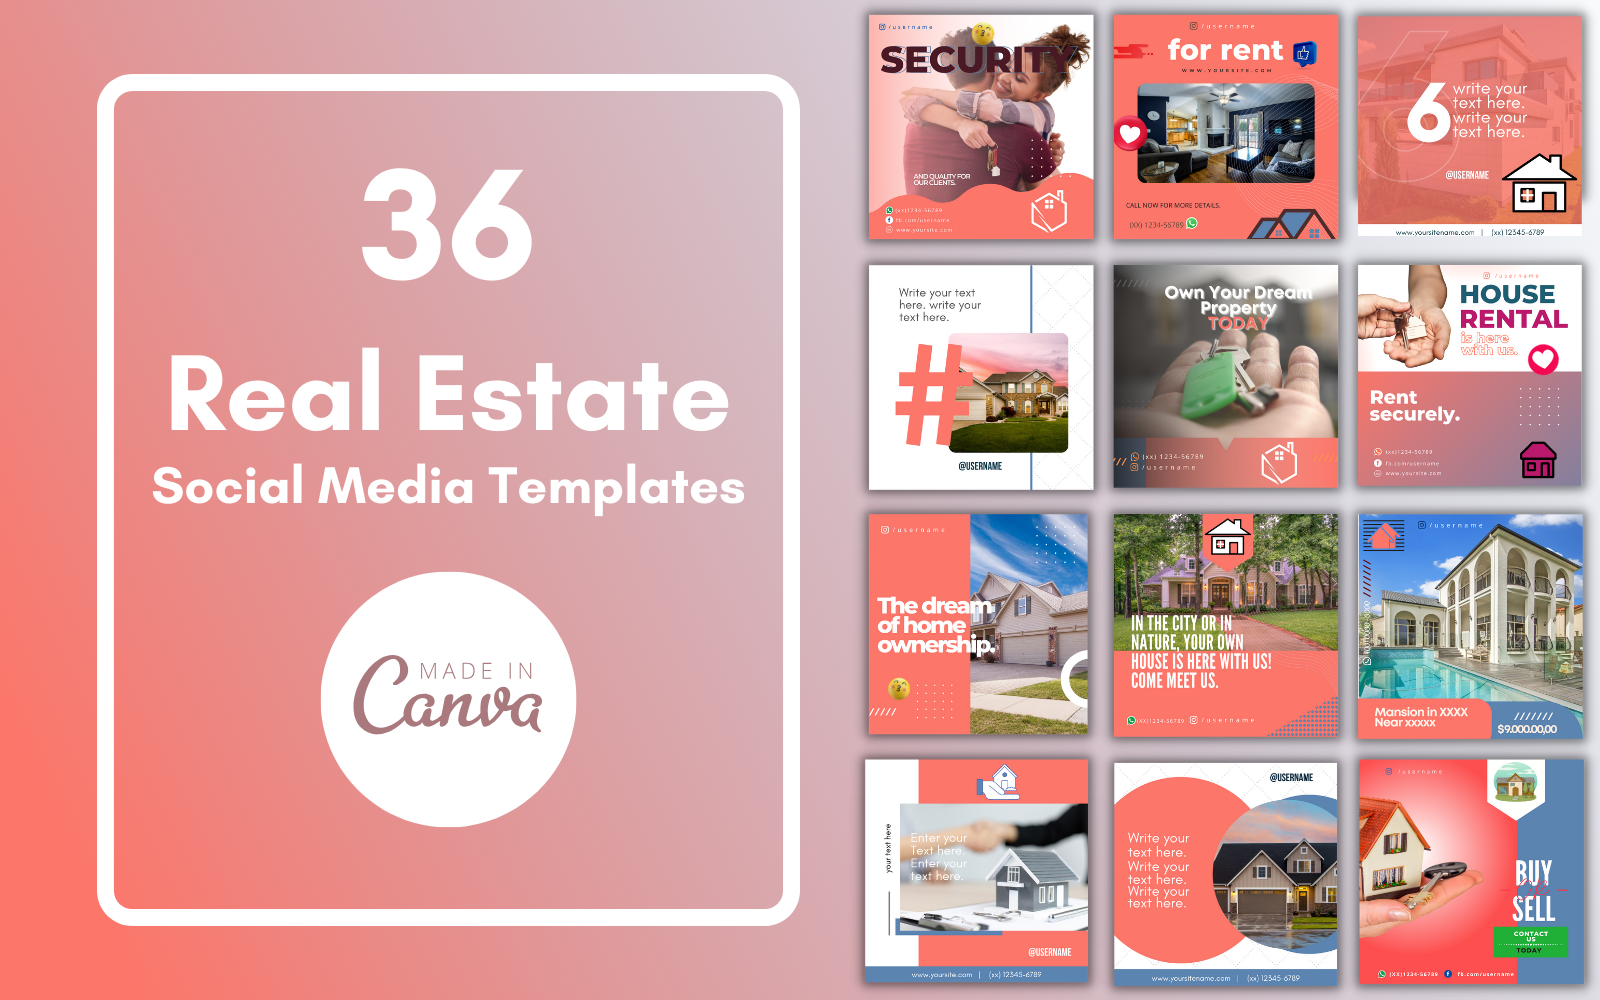 36 Real Estate Canva Templates For Social Media